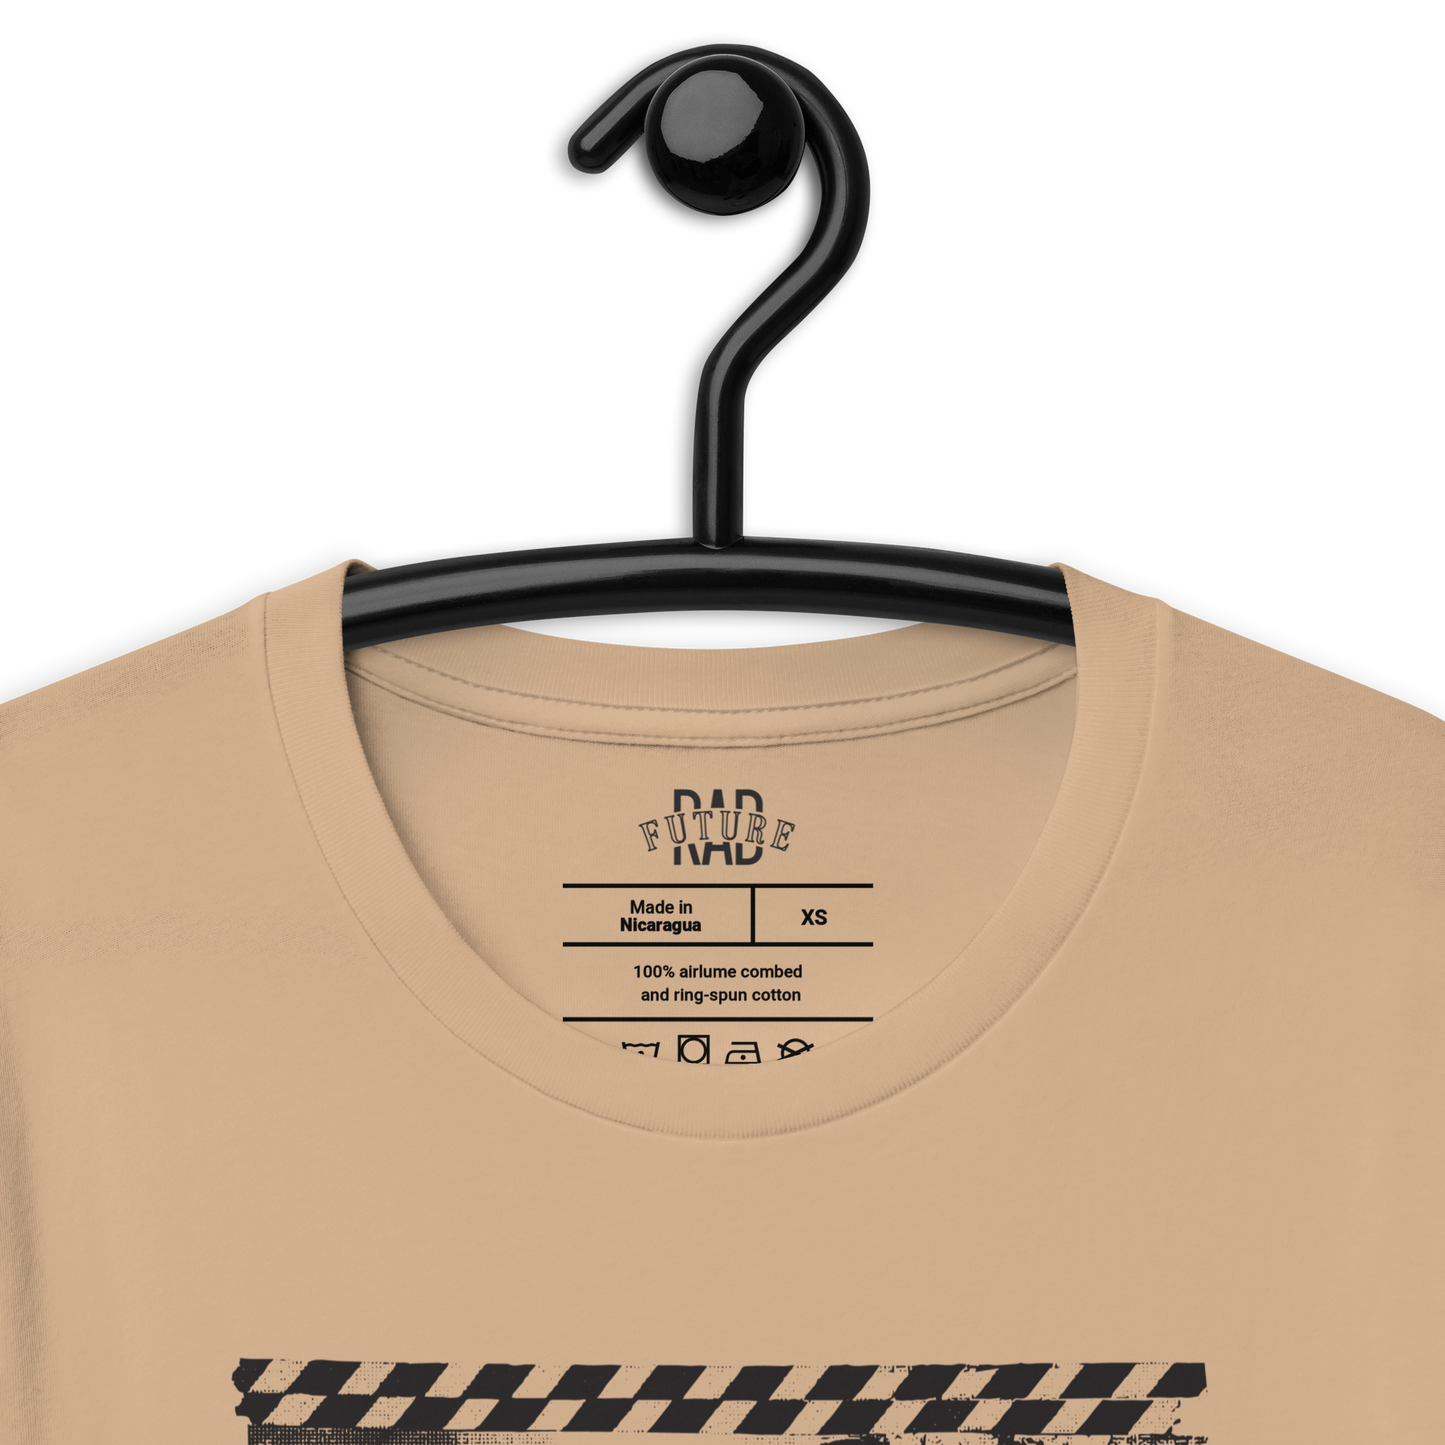 Unisex t-shirt "Do Not Bend" - Rad Future